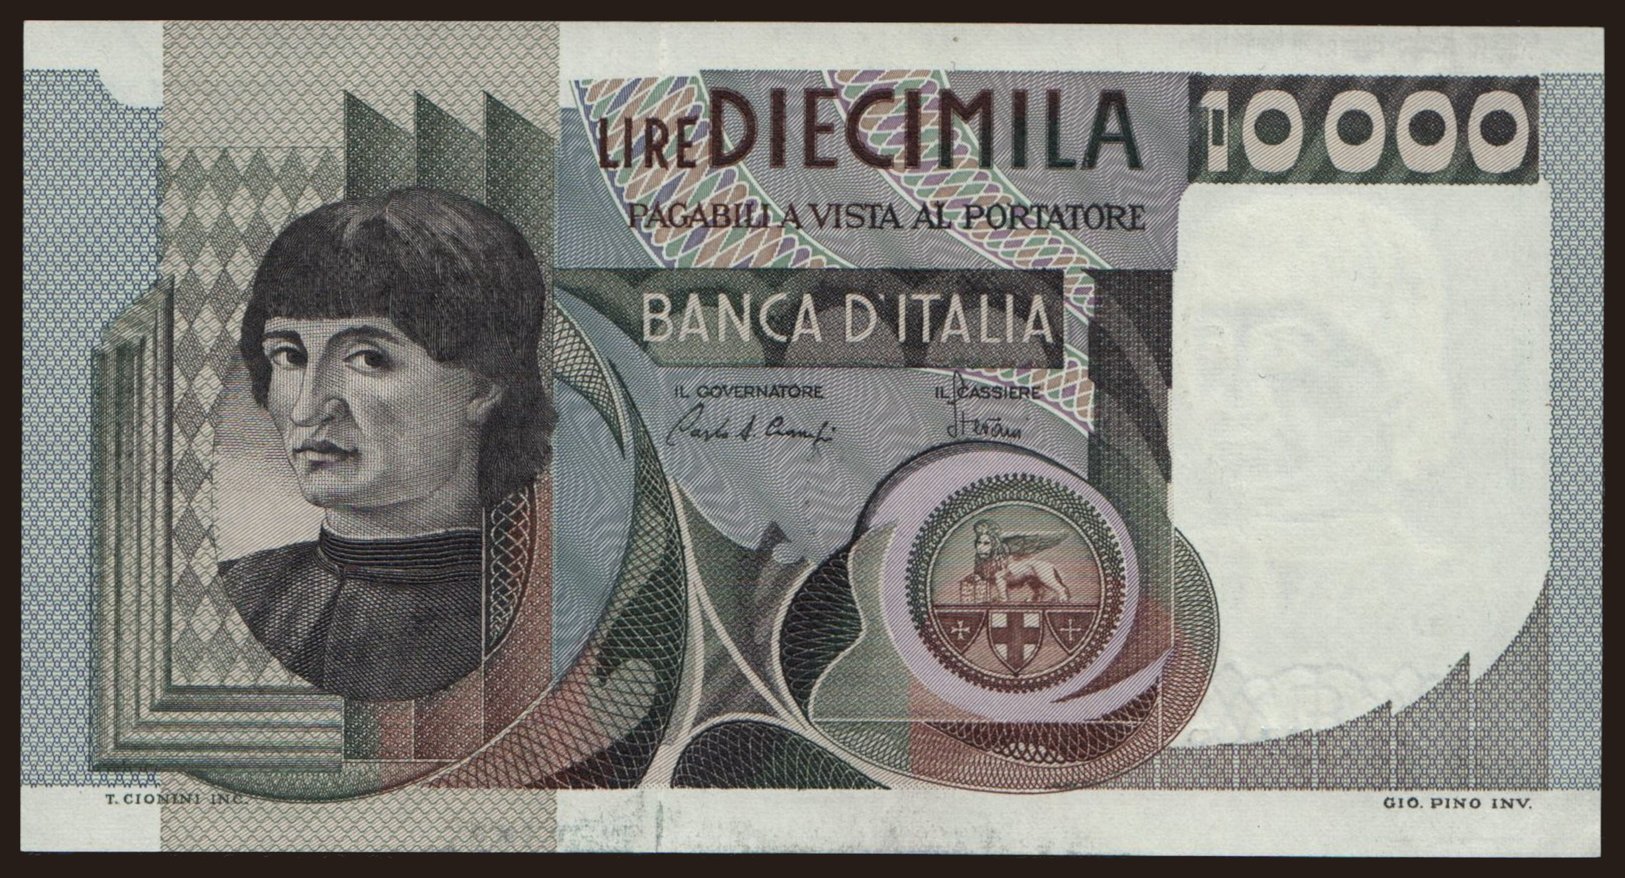 10.000 lire, 1980